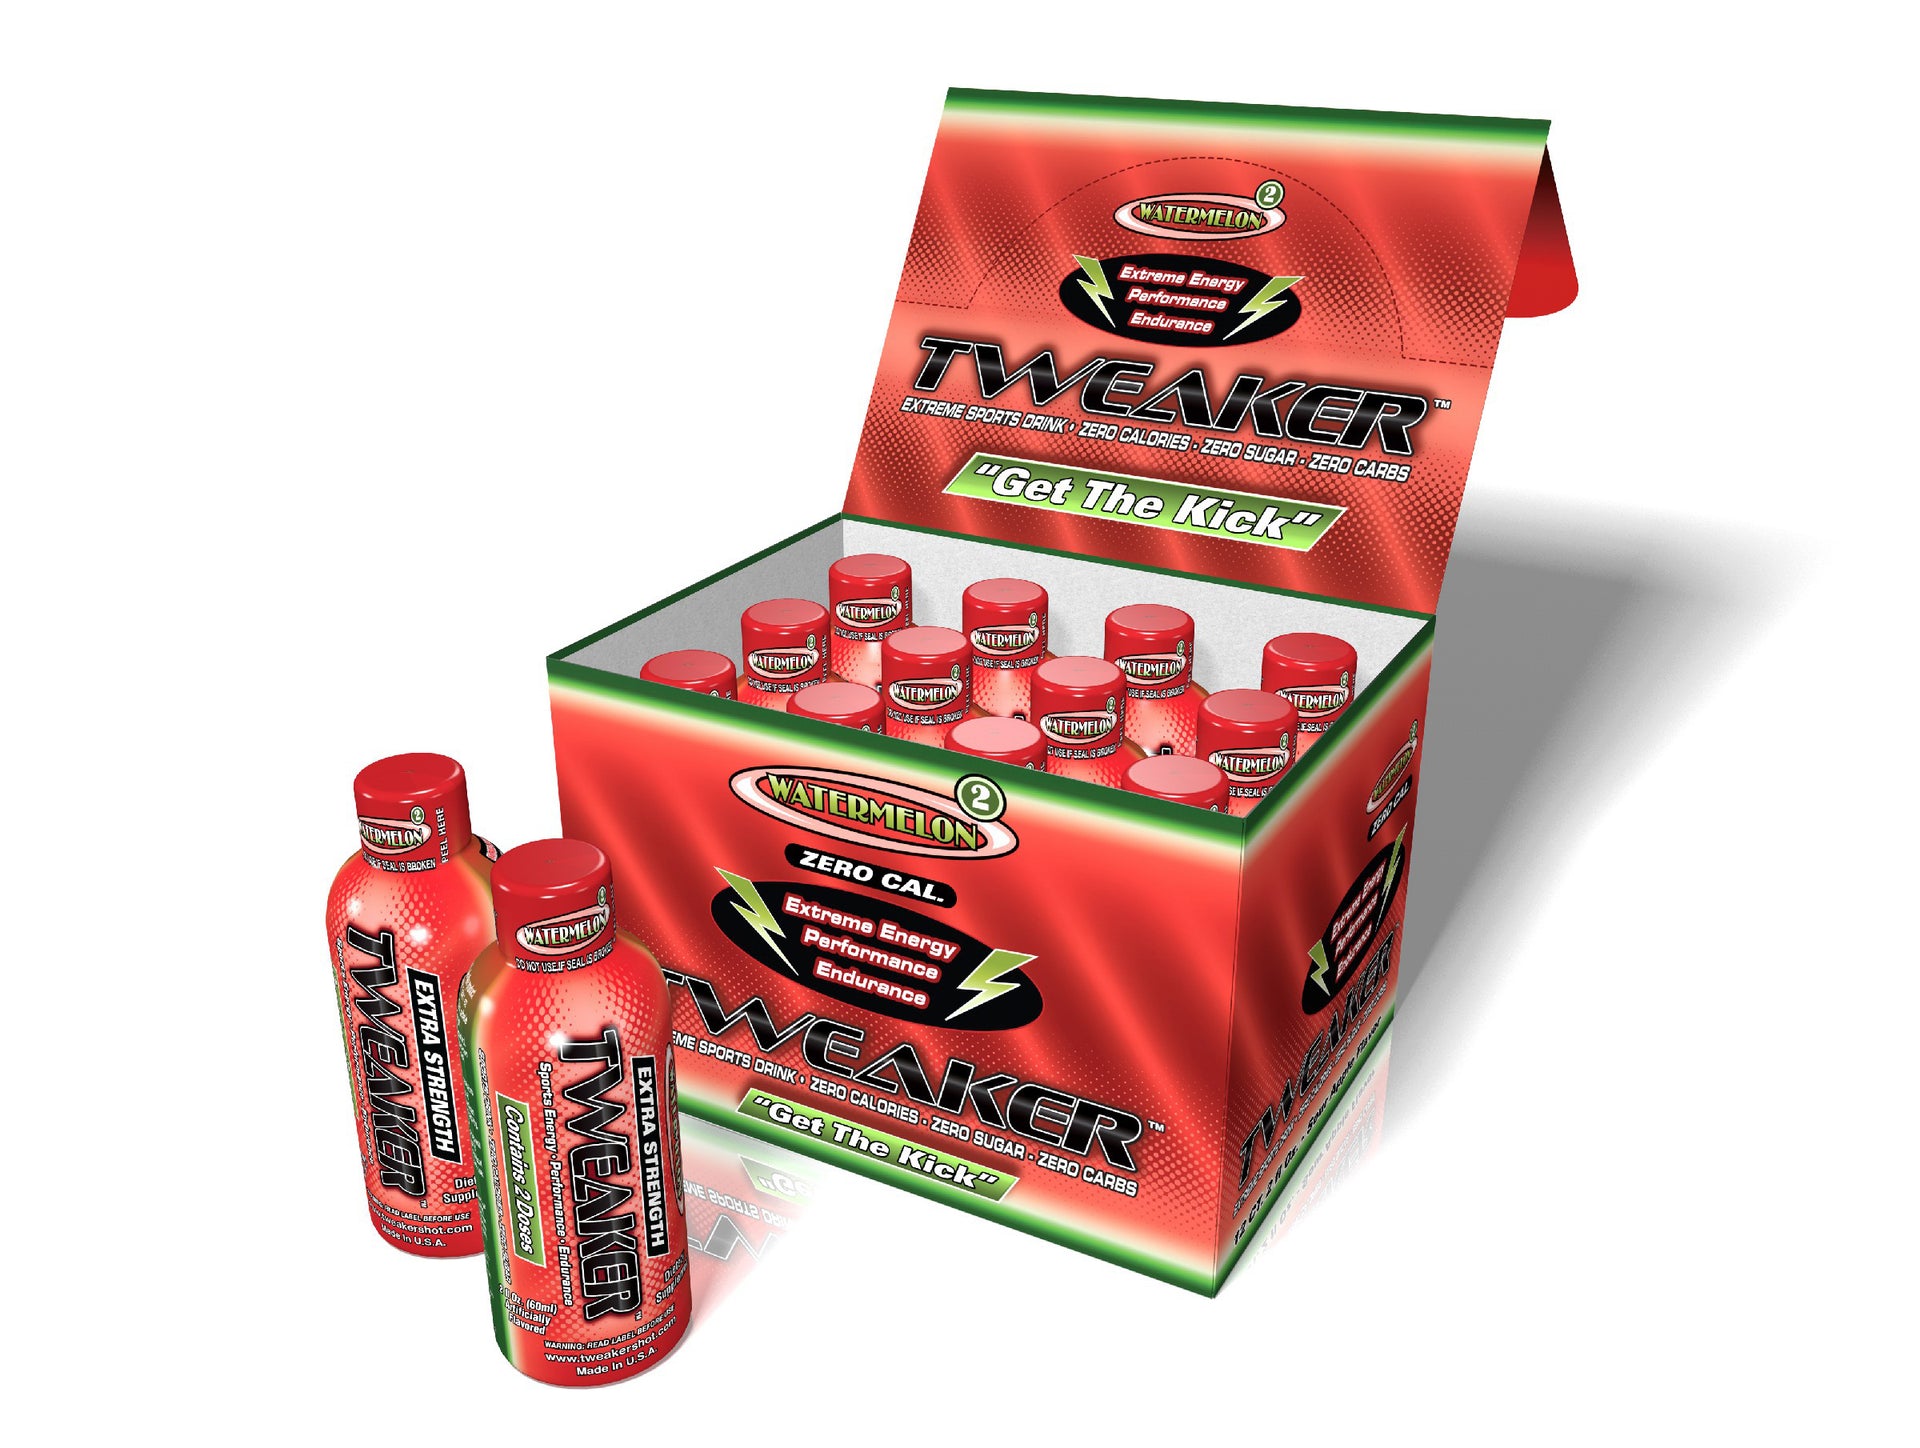 Image shows 12-ct caddy of Tweaker Energy Shot, Watermelon Flavor